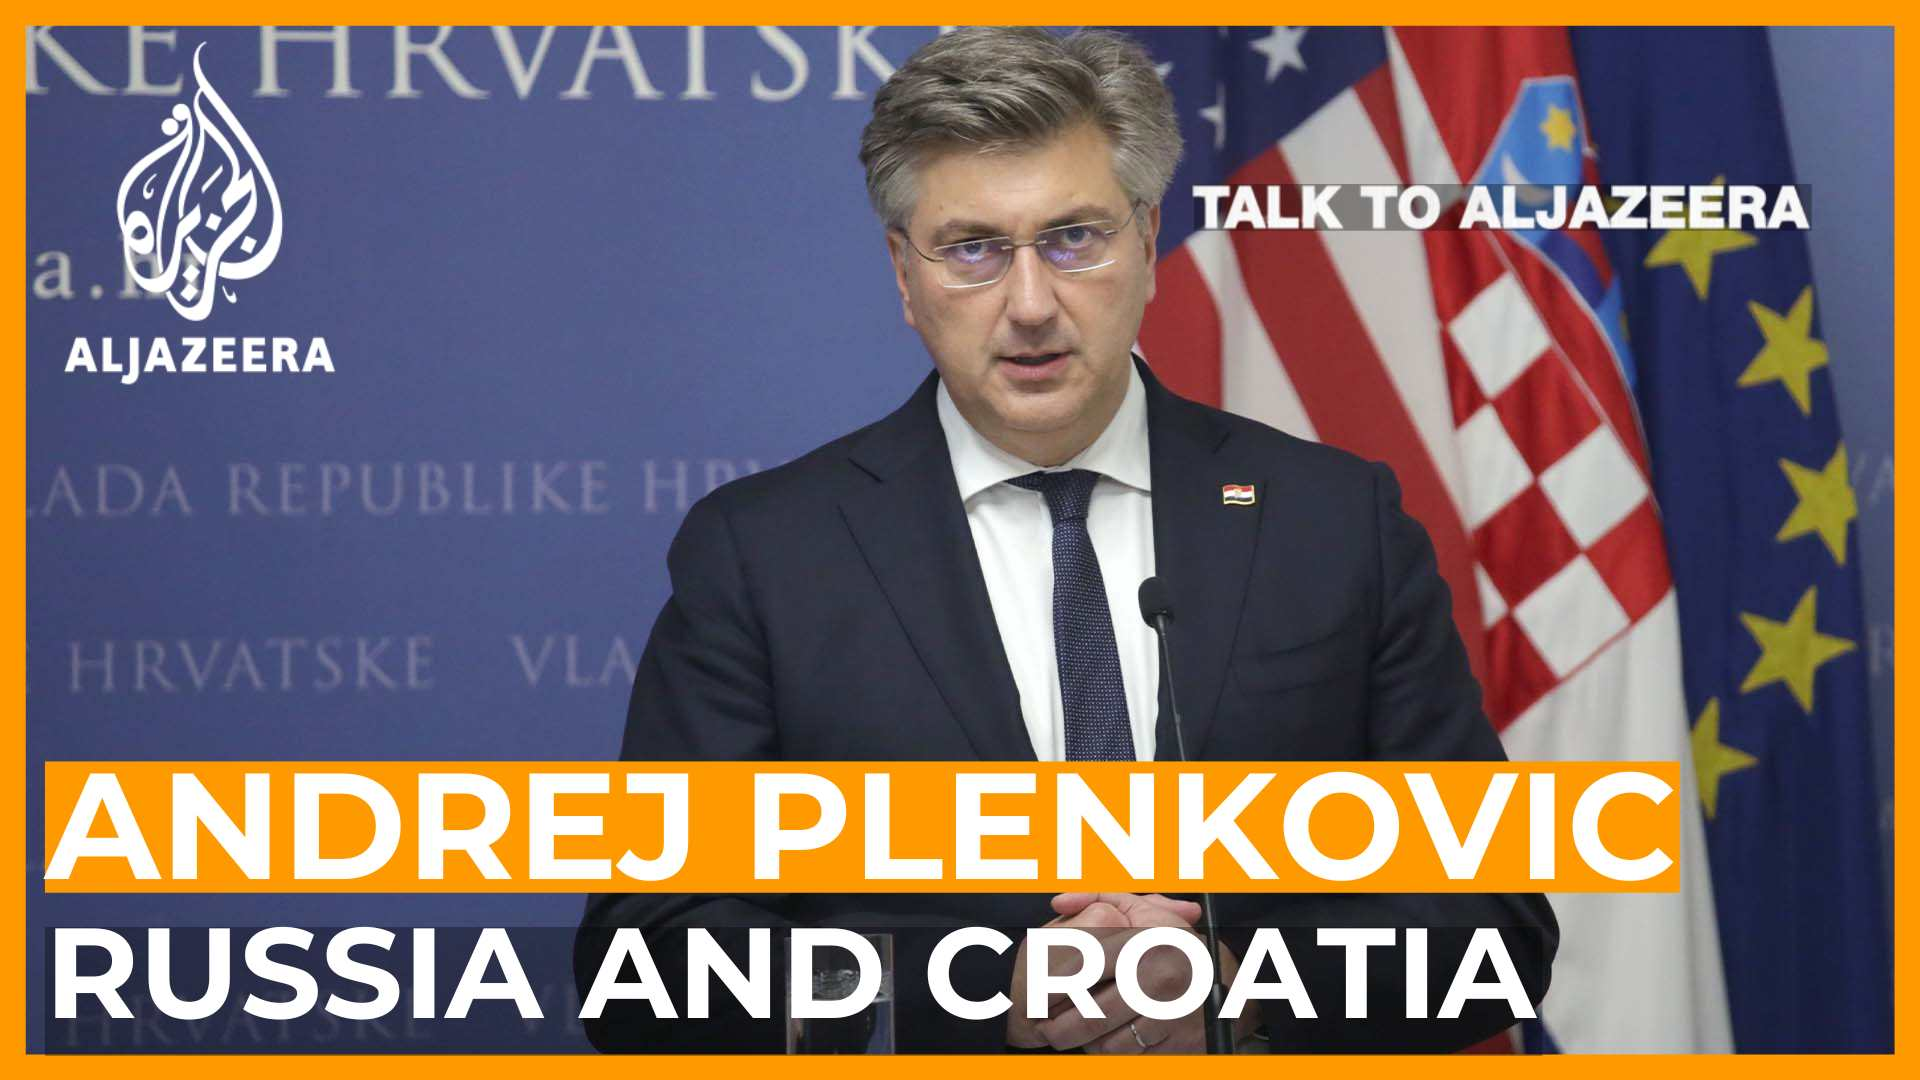 PM Plenkovic on whether Russia has any leverage over Croatia | Talk to Al Jazeera